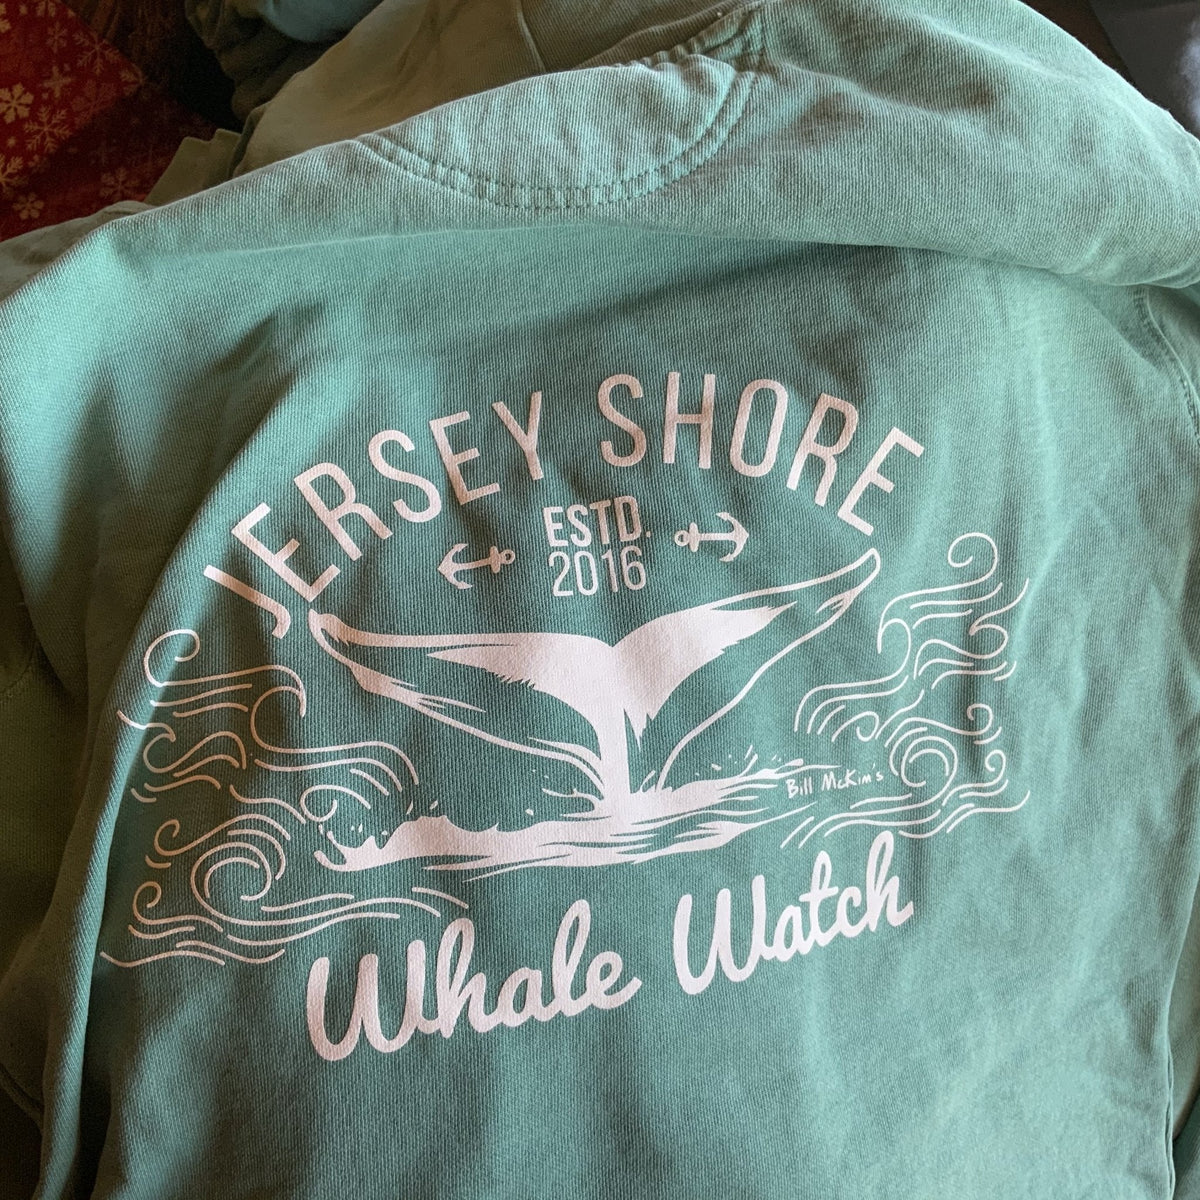 Est. 2016 Design Jersey Shore Whale Watch Heavyweight Sweatshirt printed both sides Bill McKim Photography Small Seafoam 